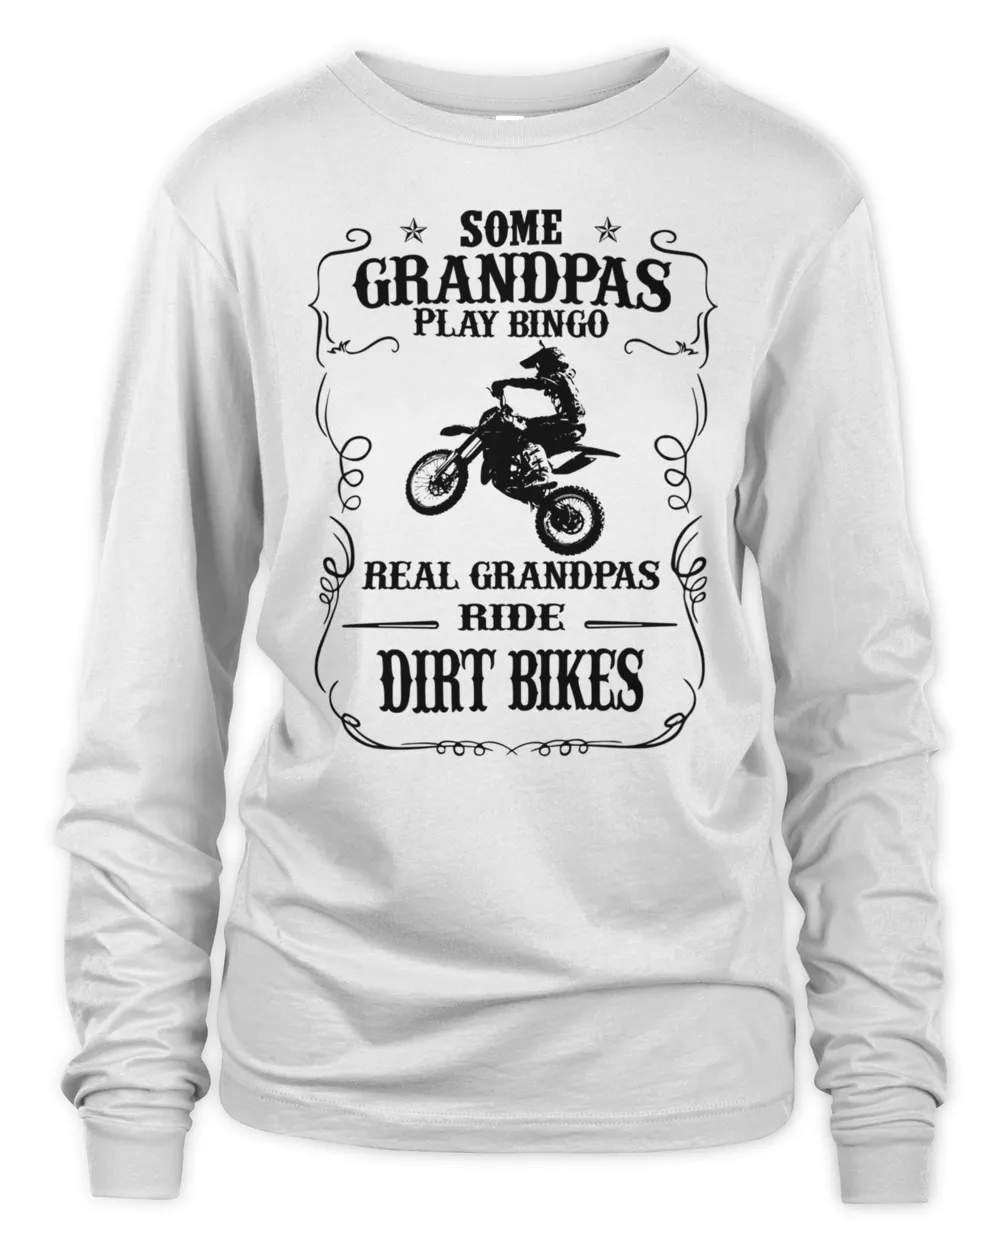 Some grandpas play bingo real grandpas ride DIRT BIKES T-Shirt